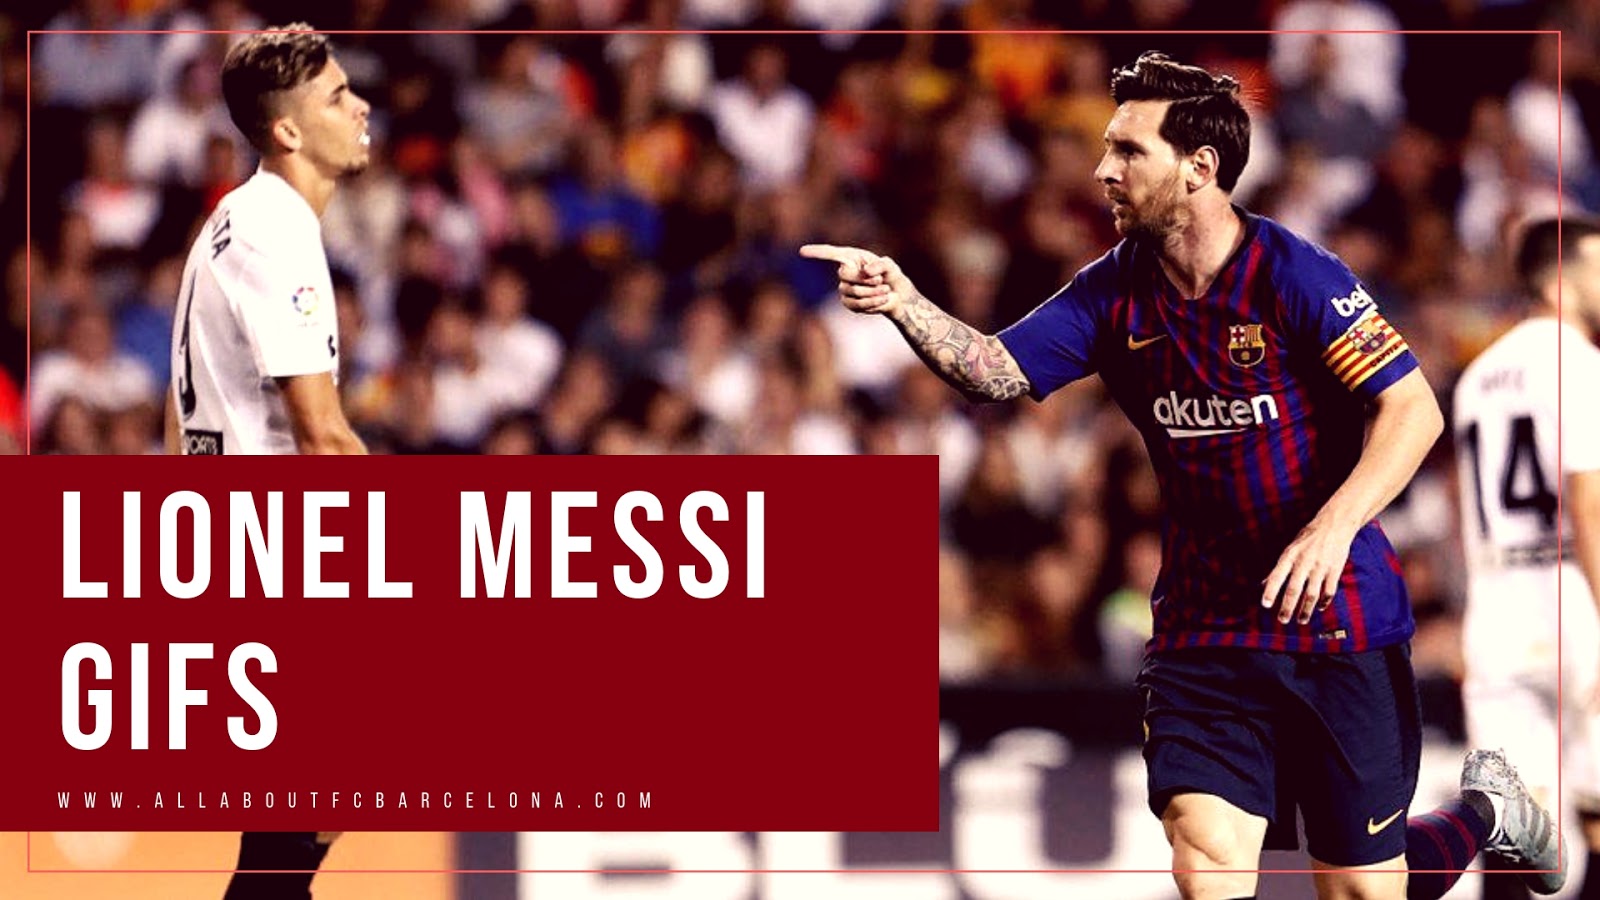 Lionel Messi Gifs against Valencia #MessiGIFS #BarcaGIFS